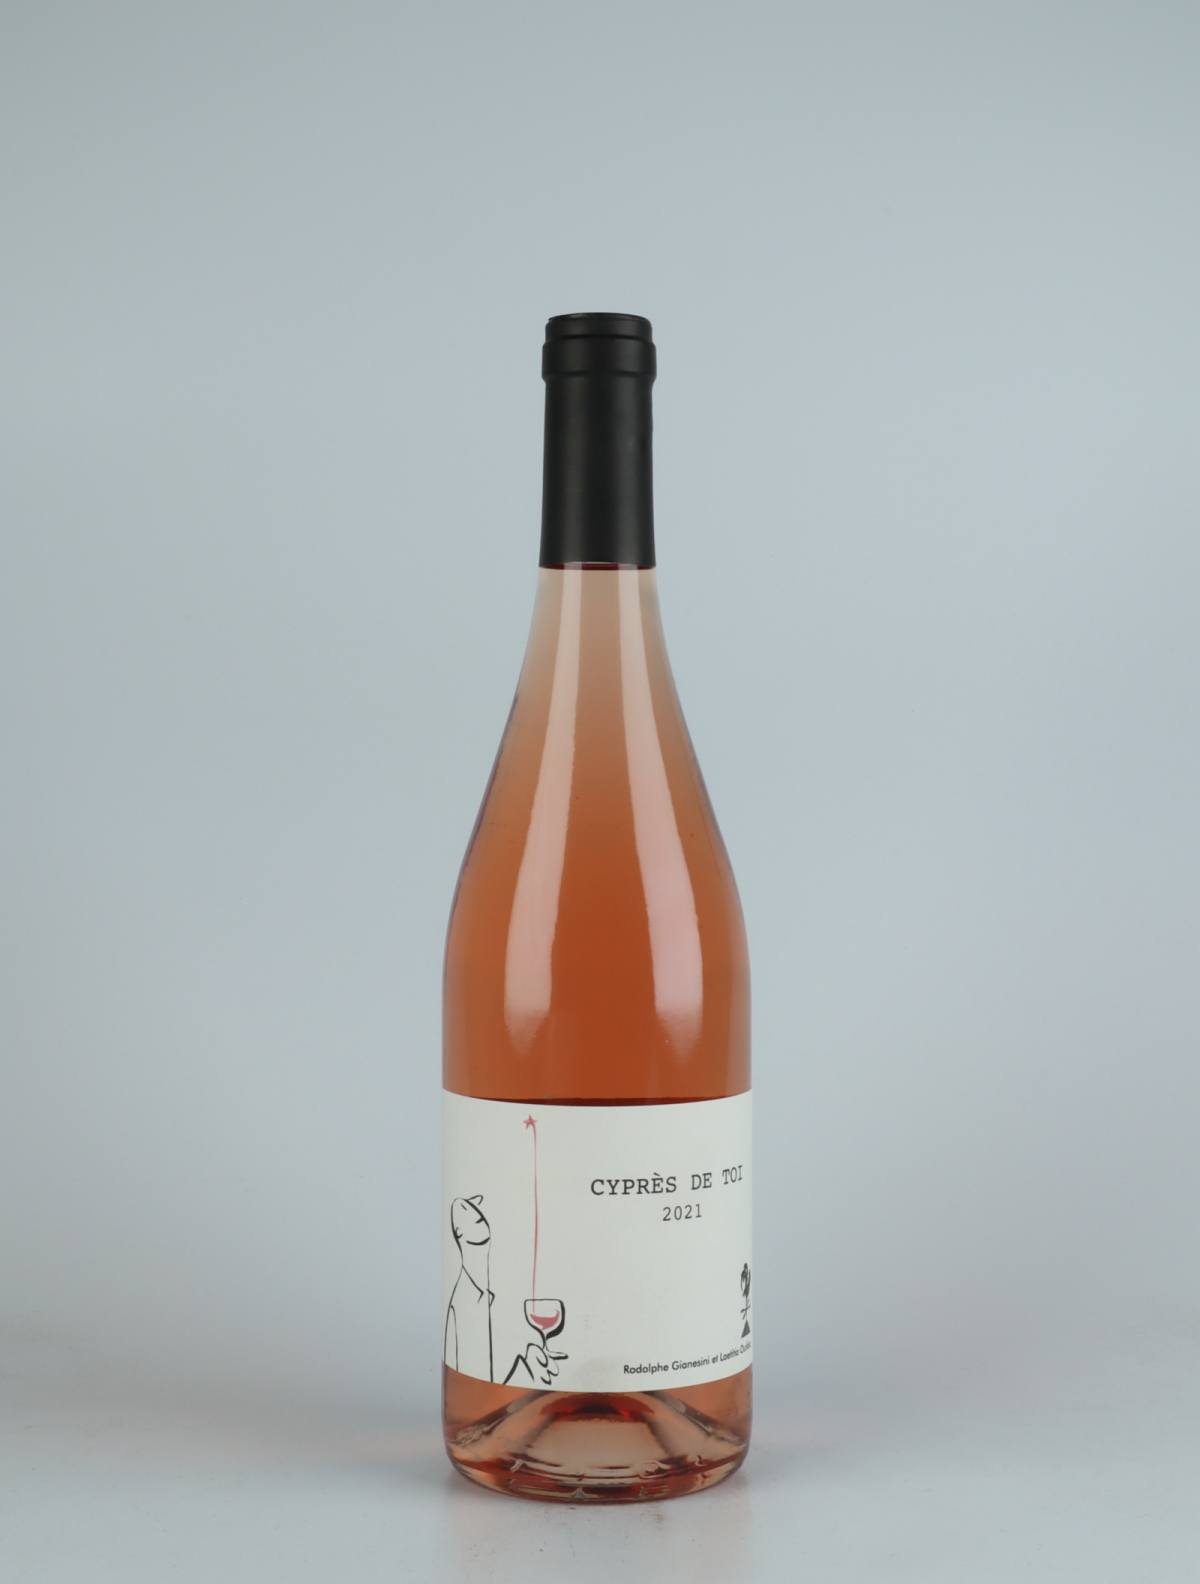 A bottle 2021 Cypres de Toi Rosé Rosé from Fond Cyprès, Languedoc in France